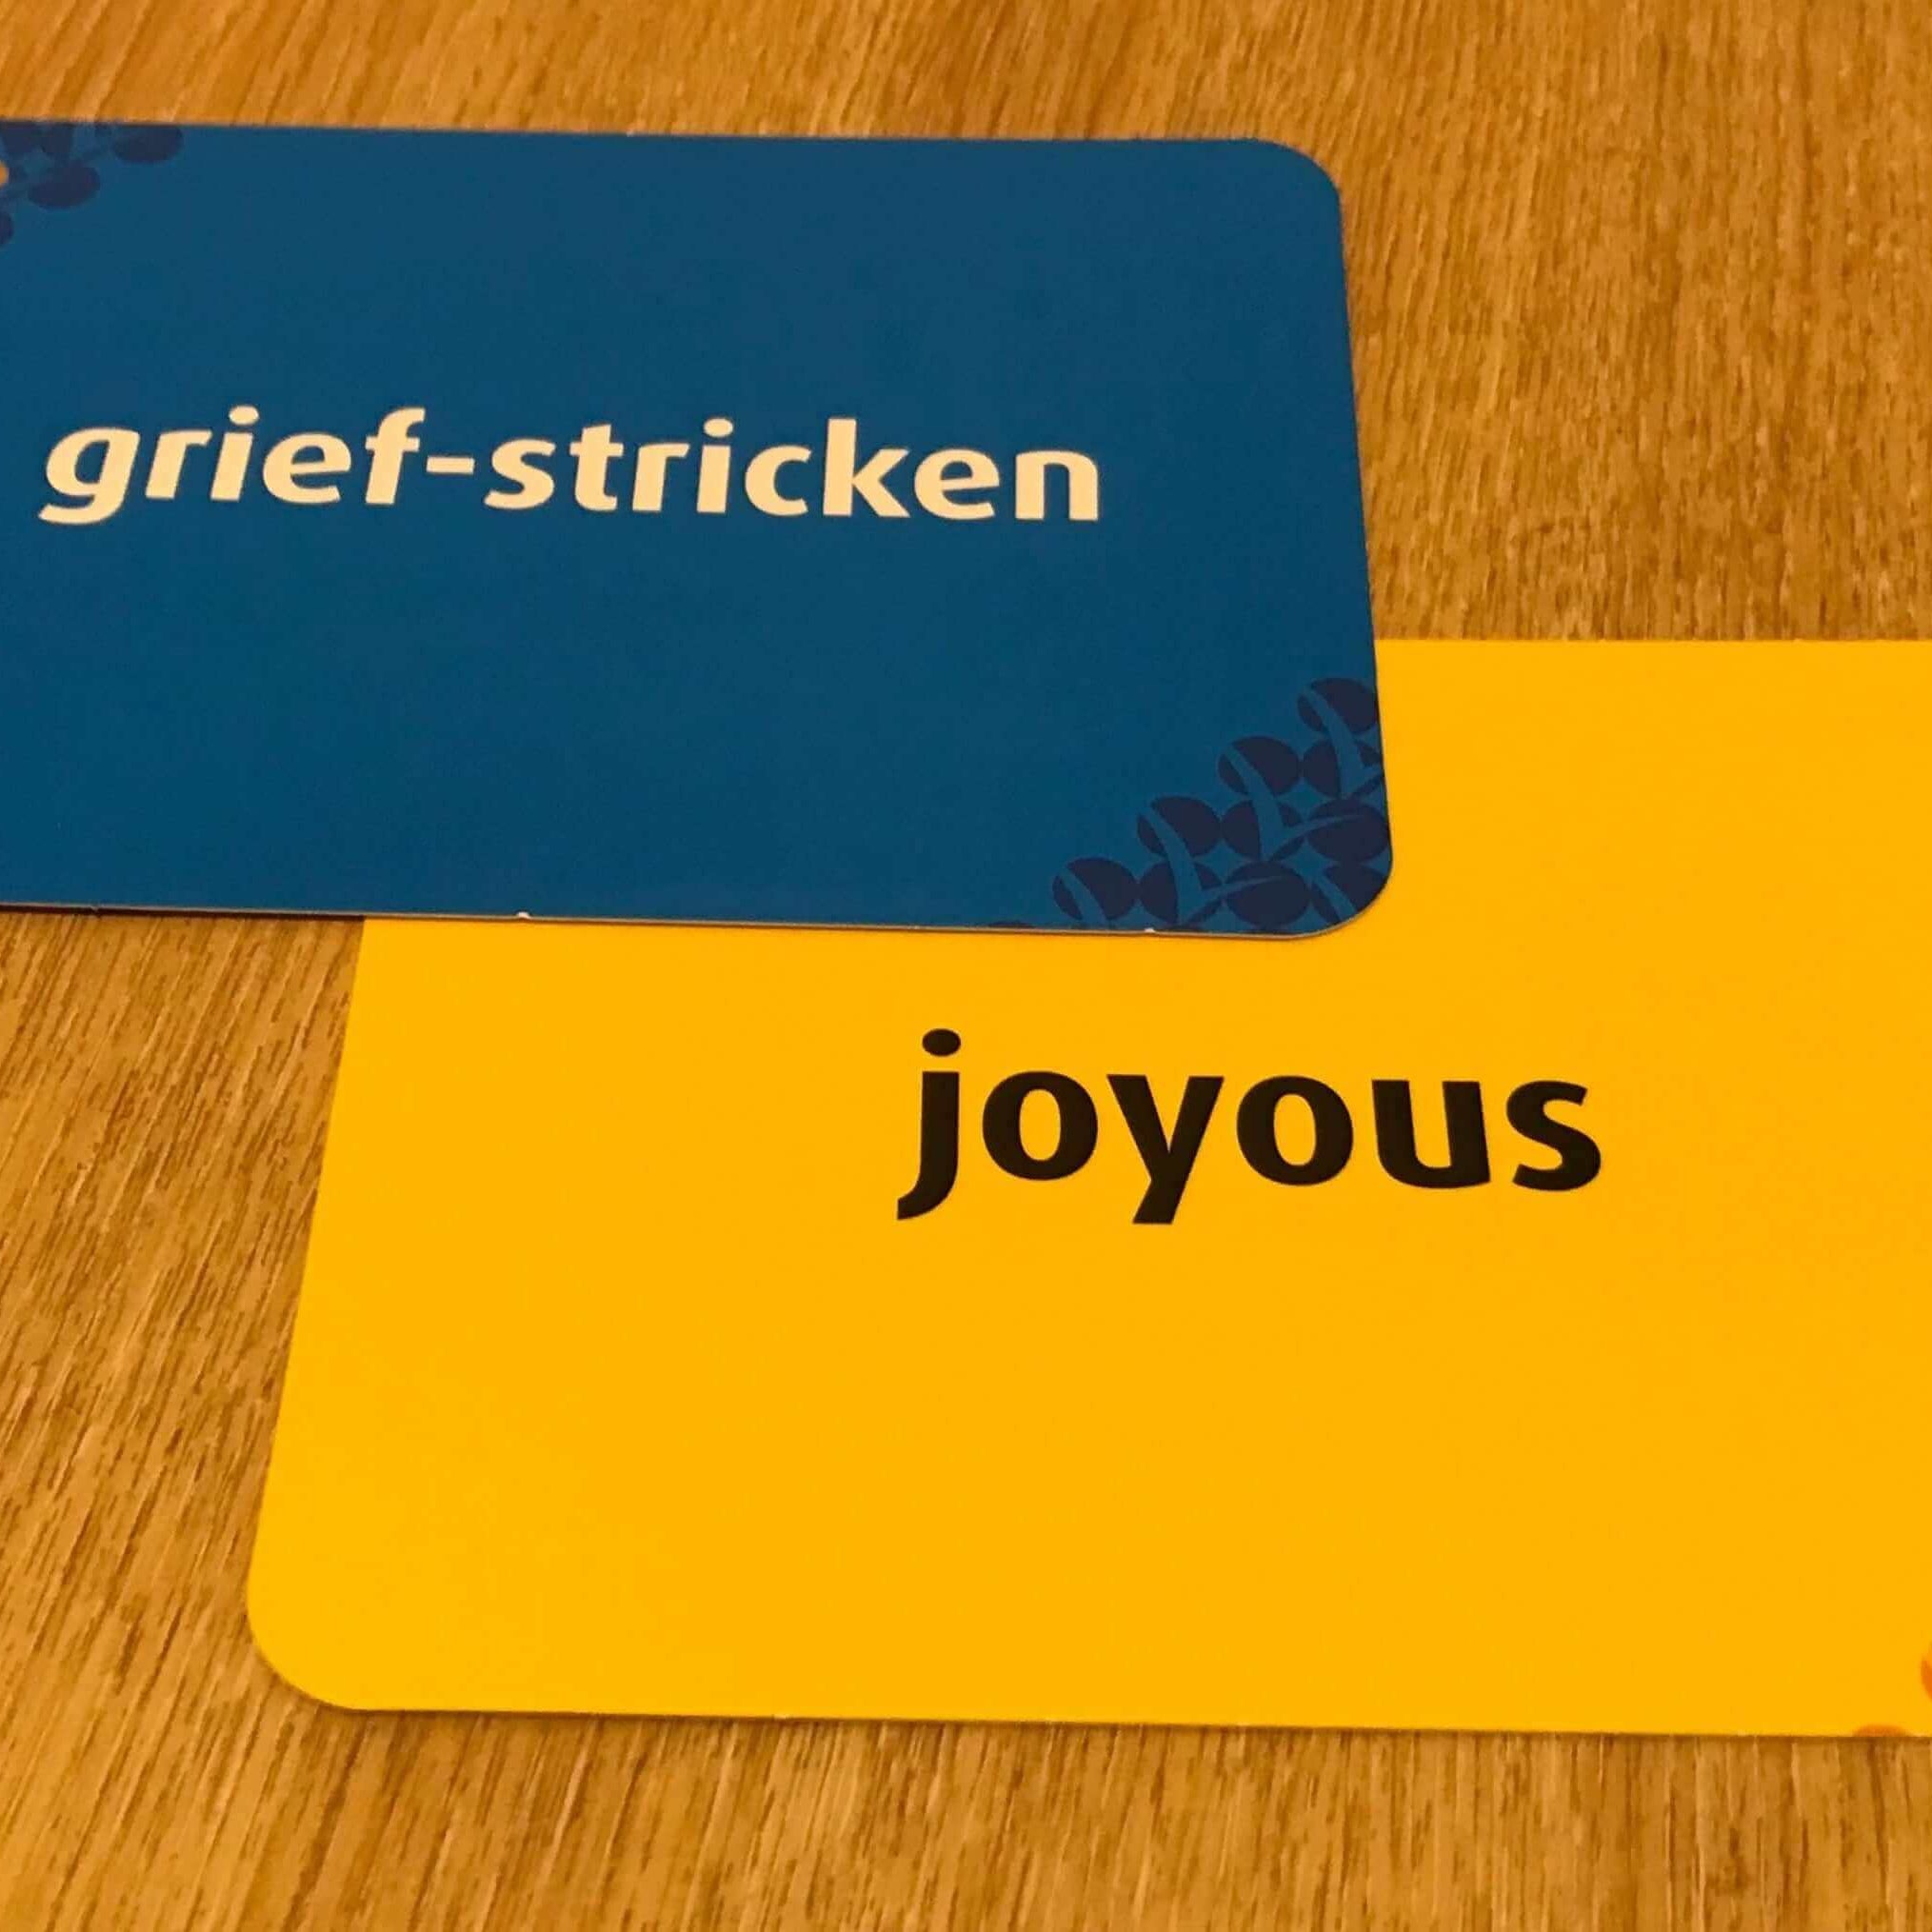 Intensity Cards, sold on the Positive Psychology Shop